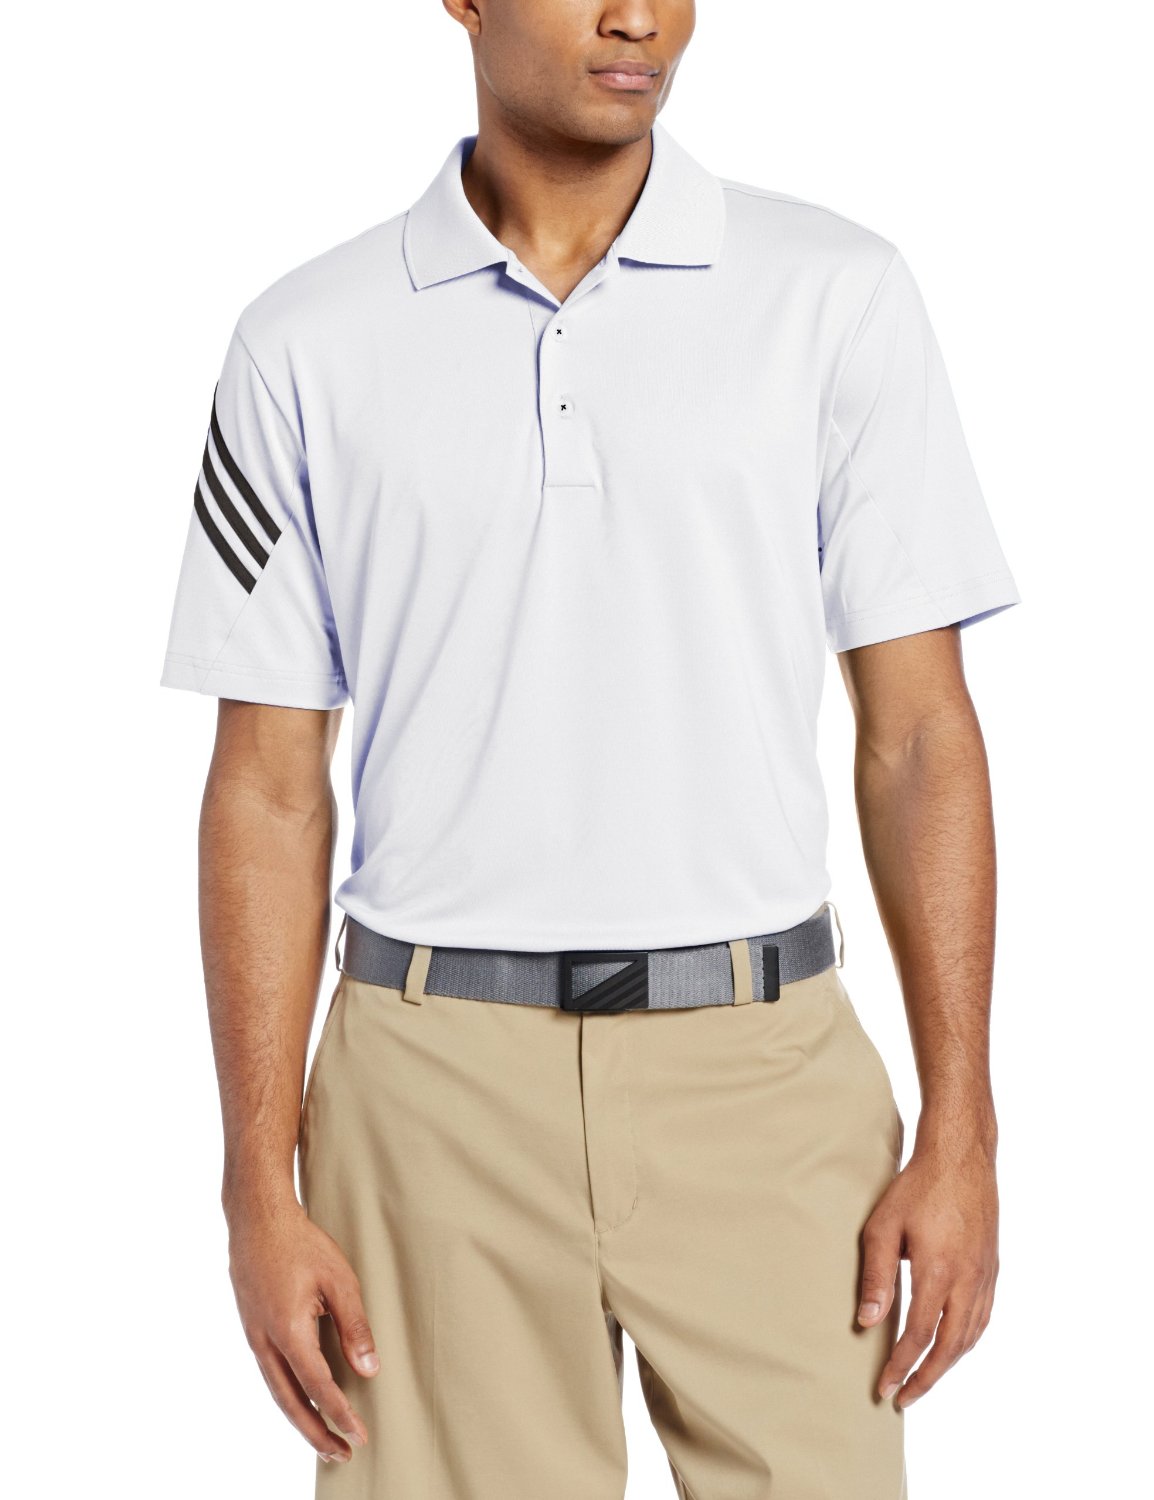 Adidas Mens Puremotion Climacool 3 Stripes Sleeve Polo Shirts